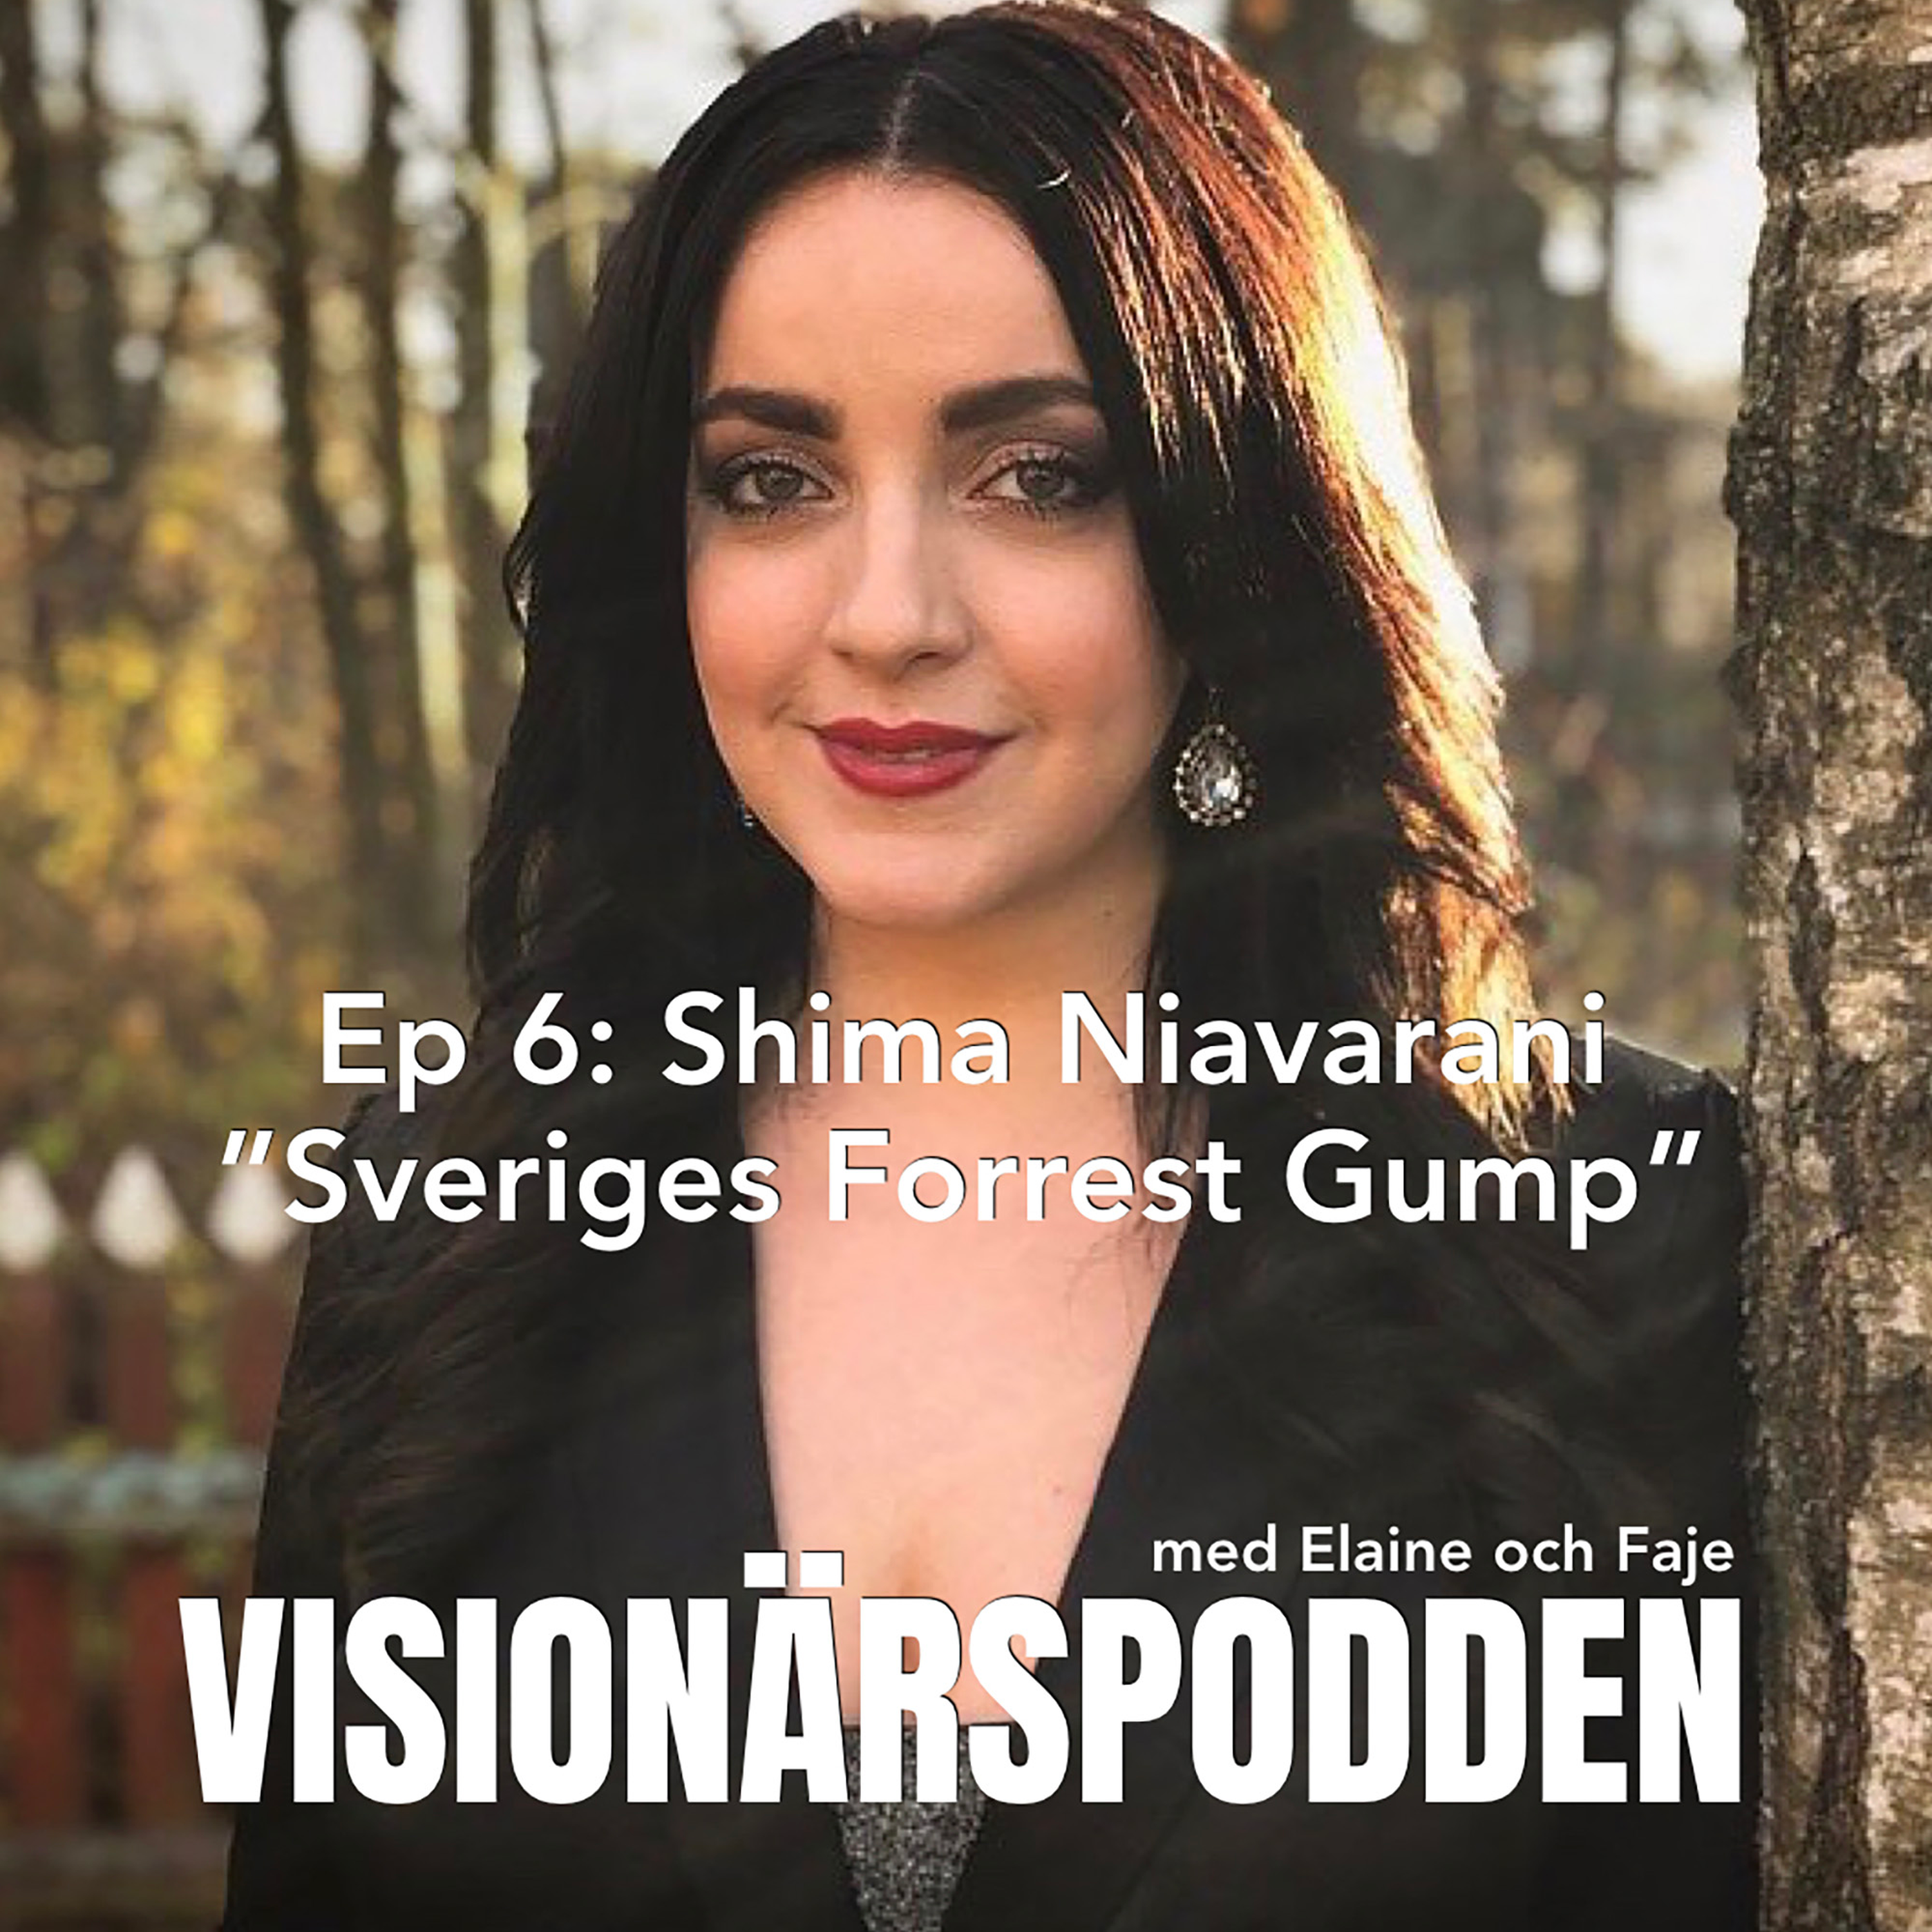 Ep 6: Shima Niavarani - ”Sveriges Forrest Gump”